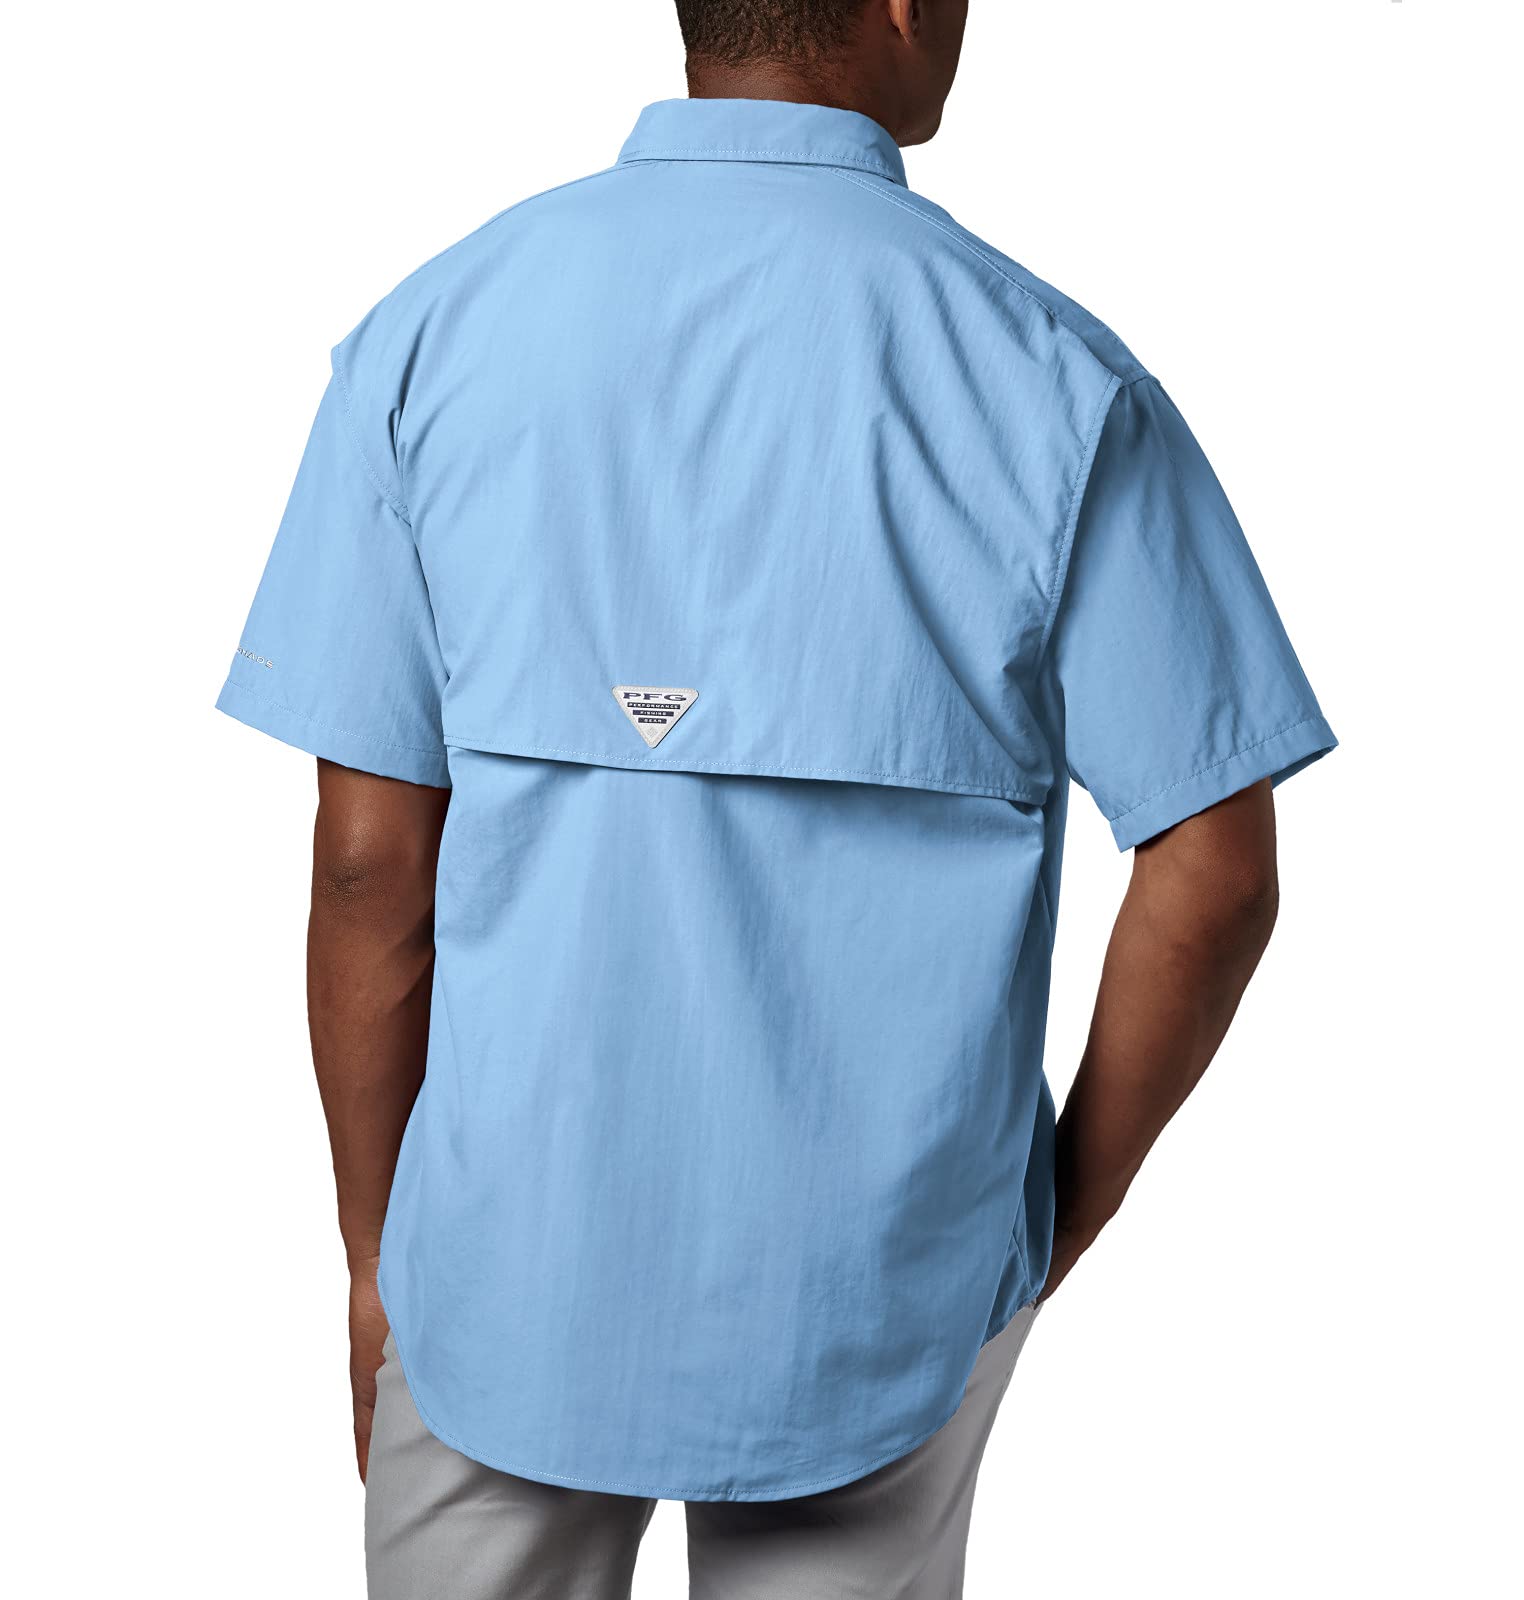 Columbia Men's Bahama II UPF 30 Short Sleeve PFG Fishing Shirt, Sail, Large